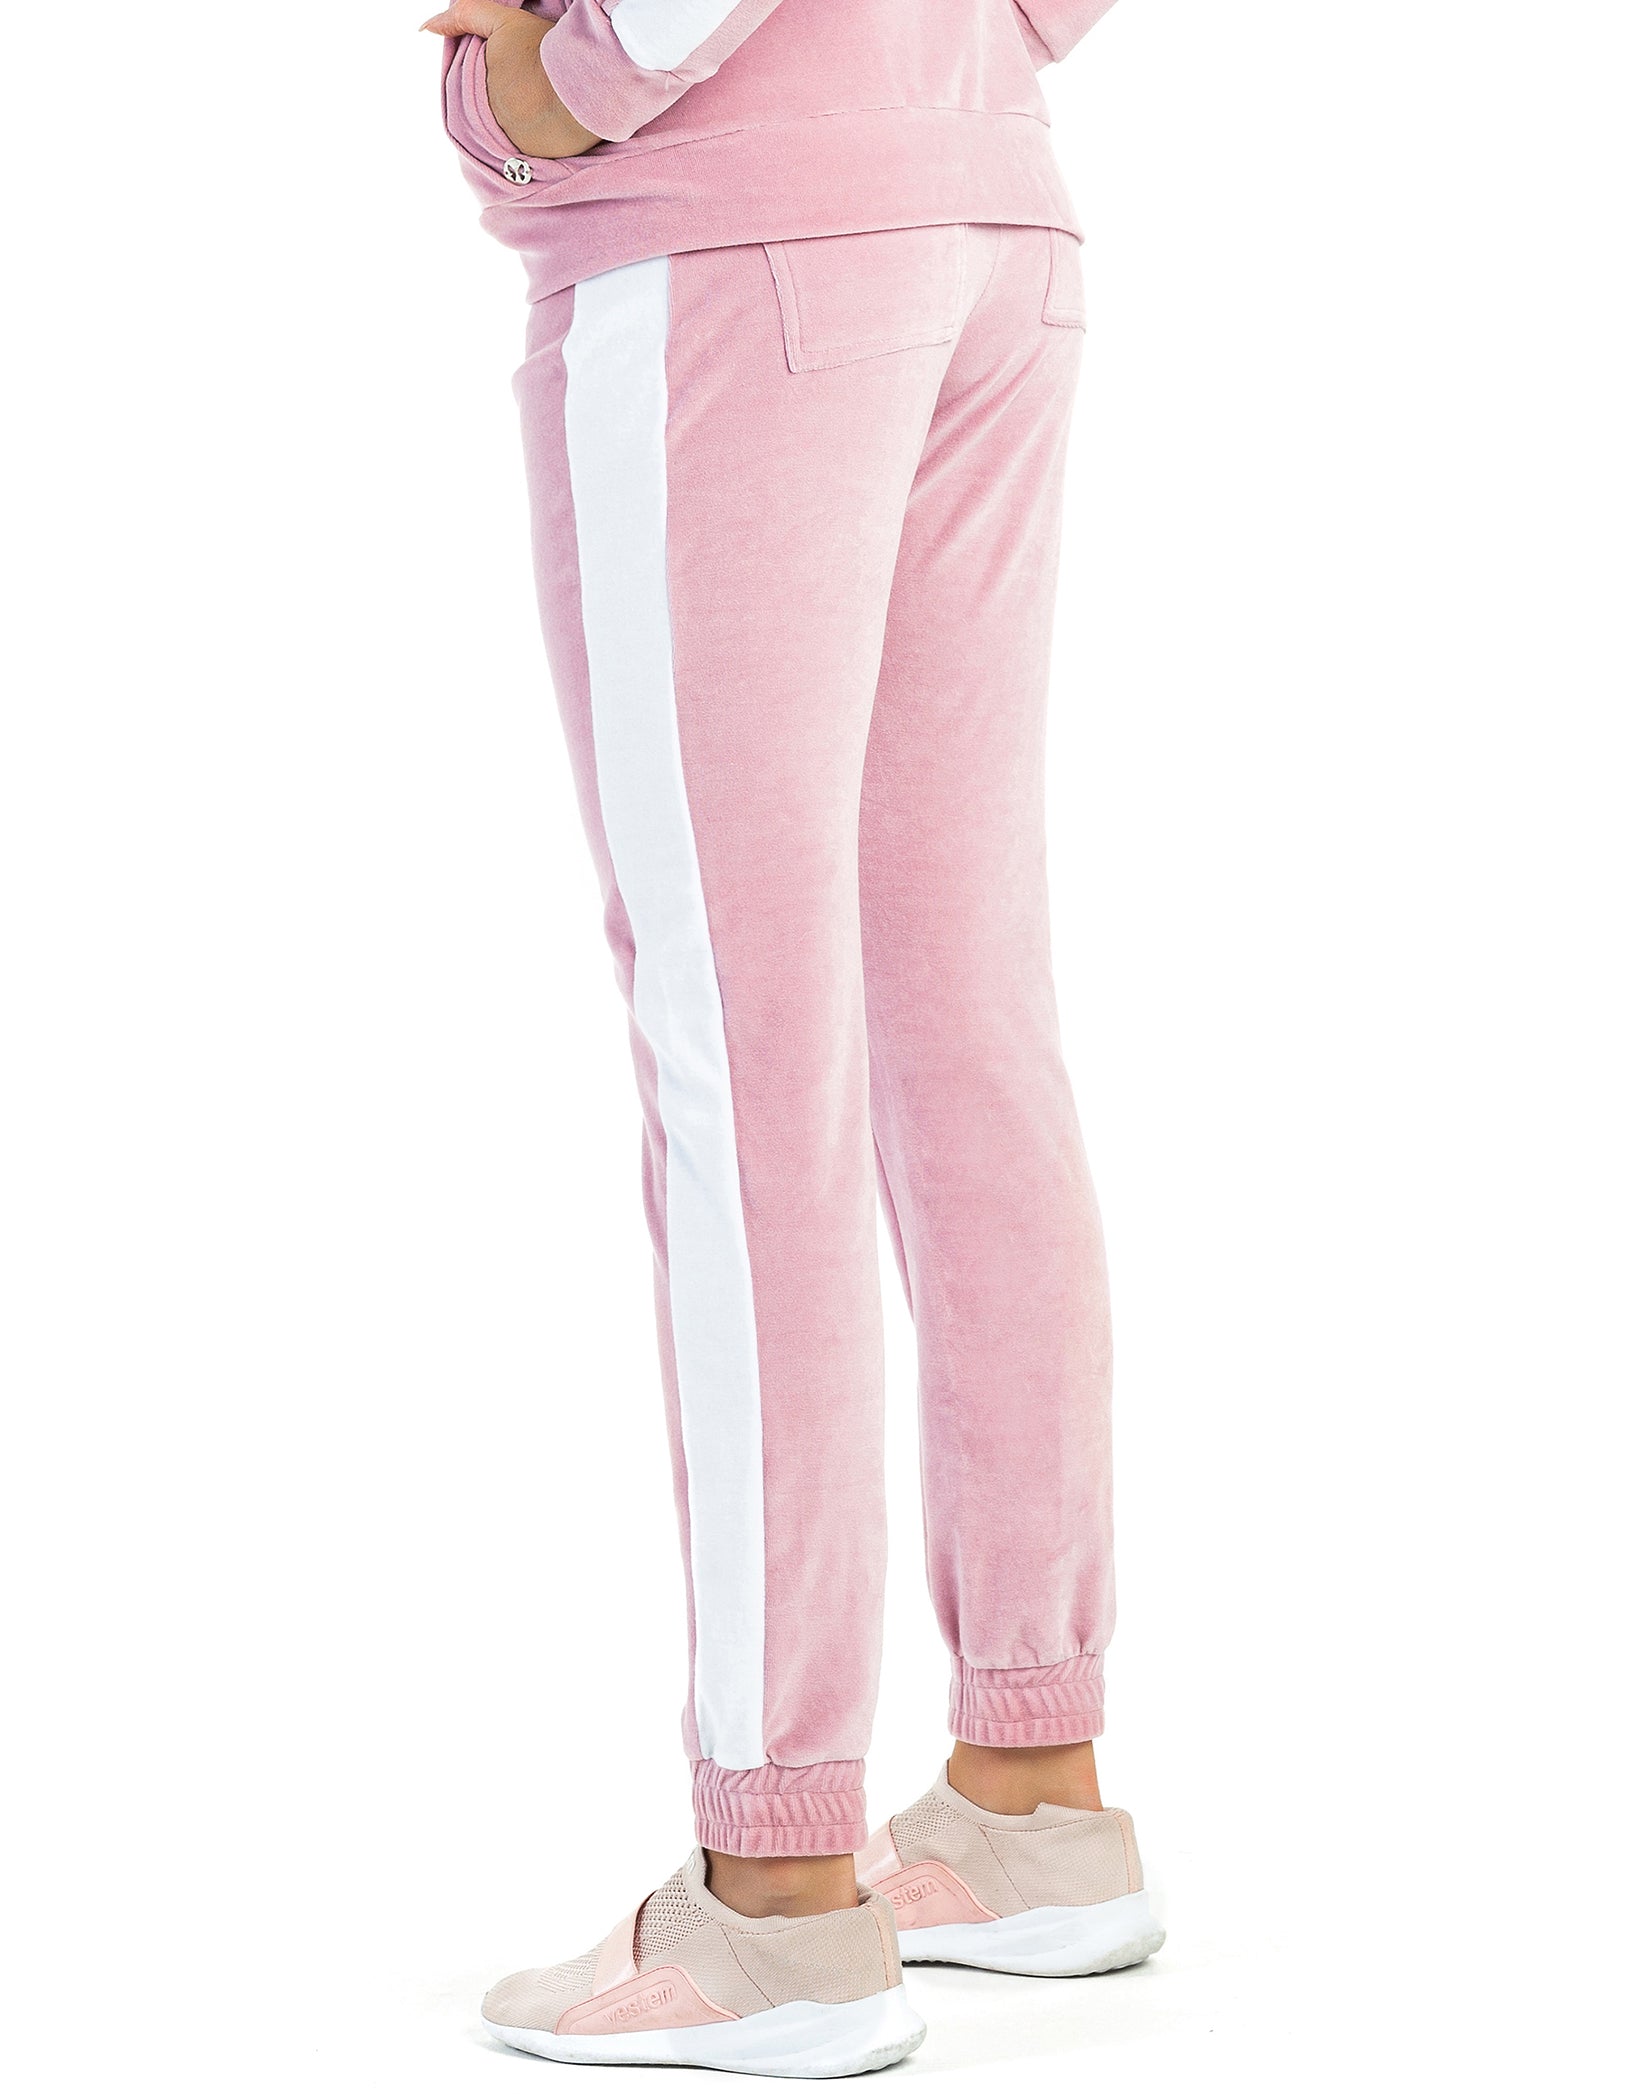 Vestem - Northwestern Pink Romance Pants - CAL129C0243